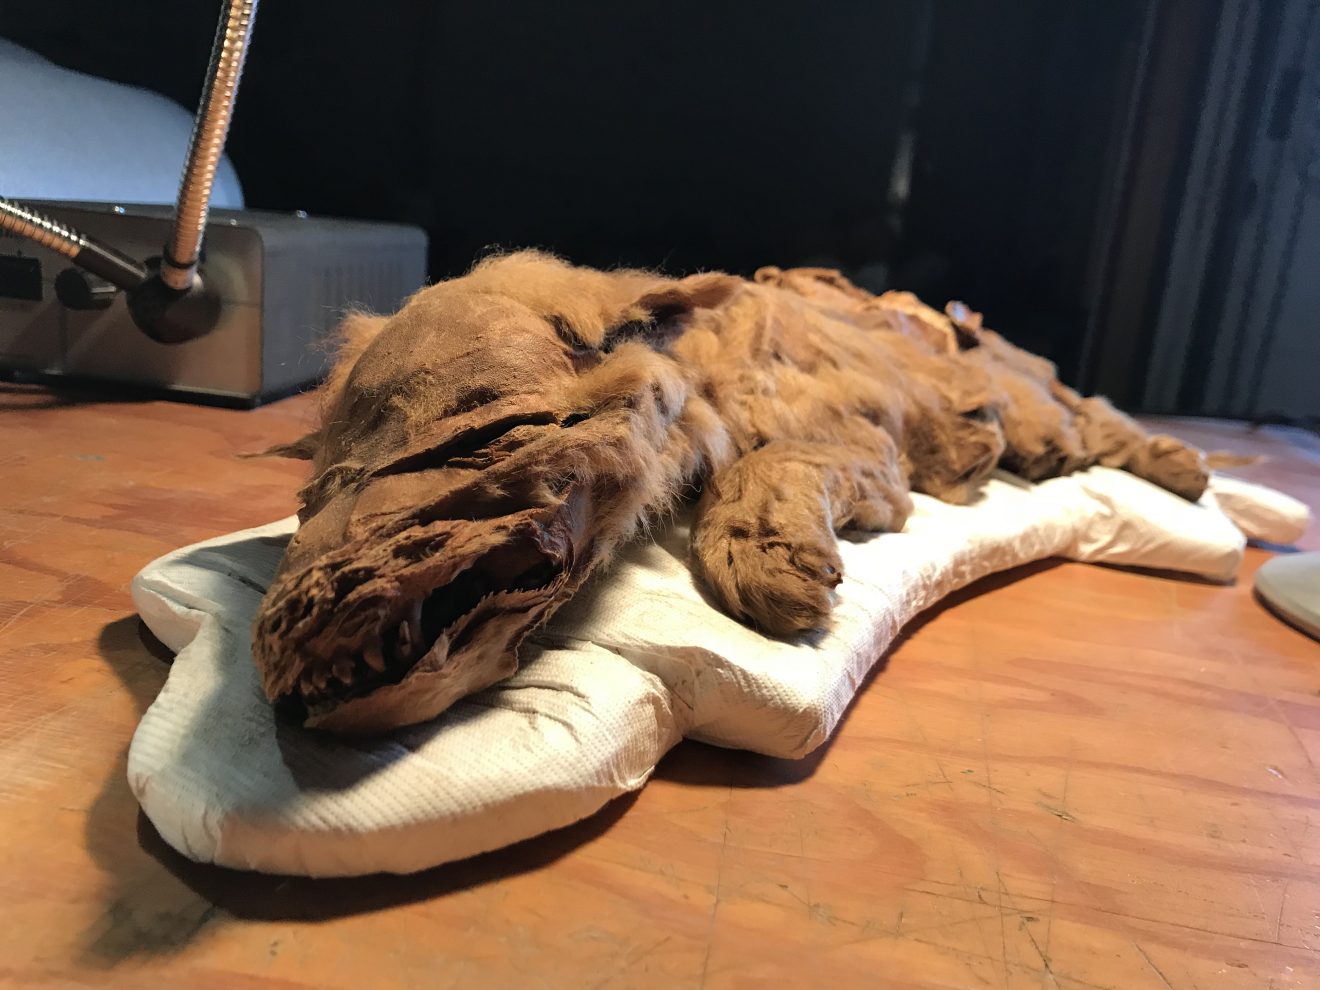 Photo by Grant Zazula. The mummified remains of Zhur, an ancient mummified wolf pup found in the Yukon, Canada.